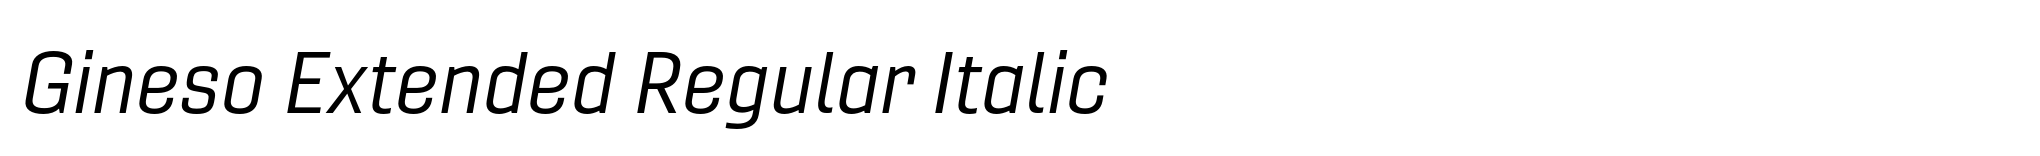 Gineso Extended Regular Italic image